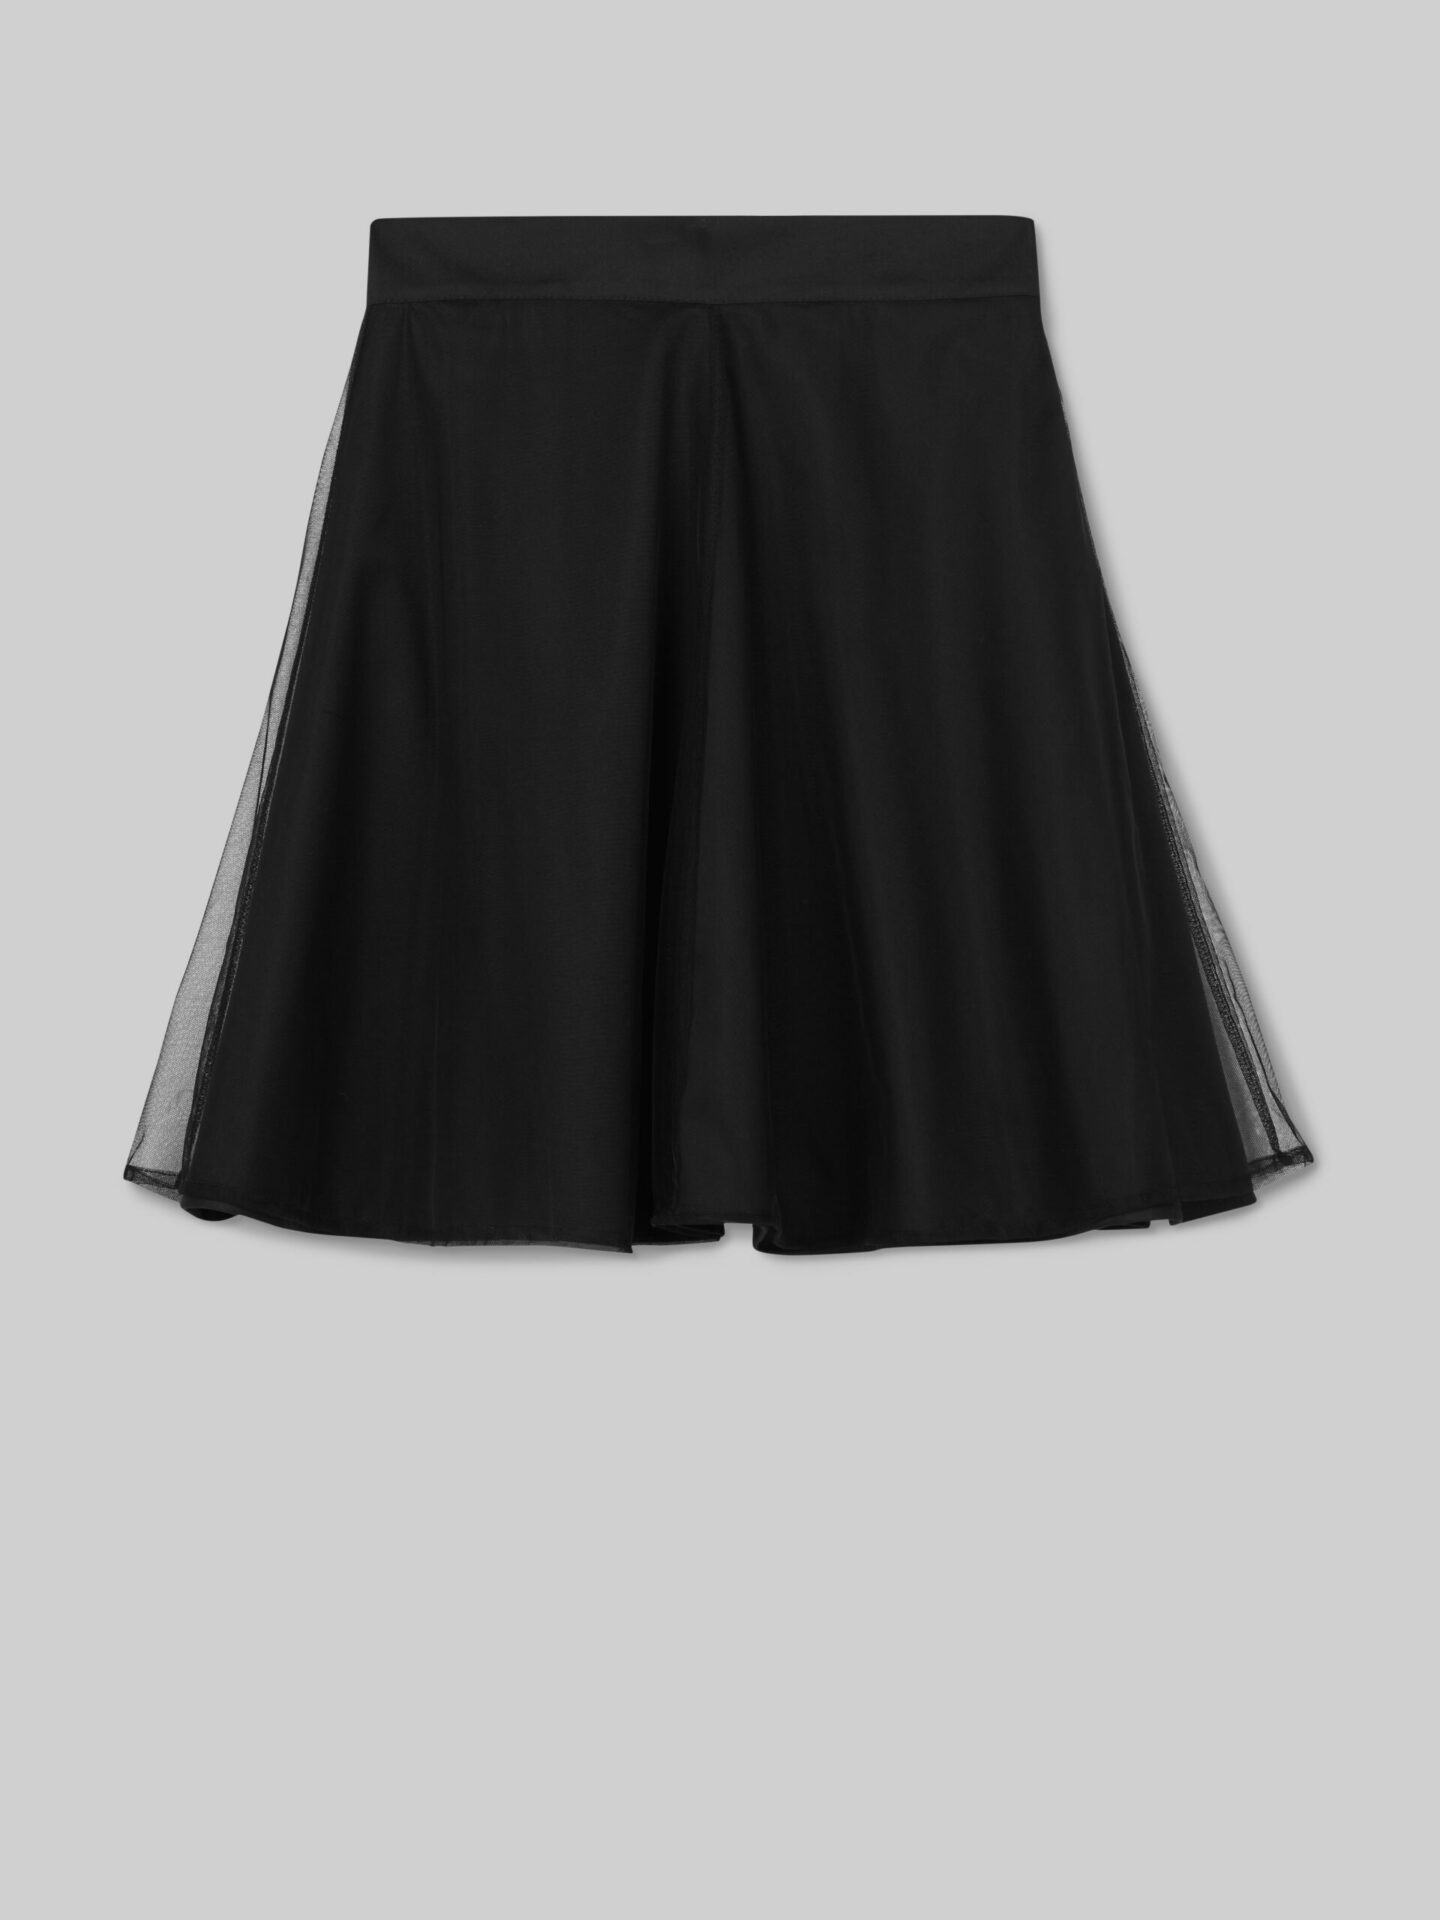 Stella Skirt in Black for Kids - Eli and Amalia